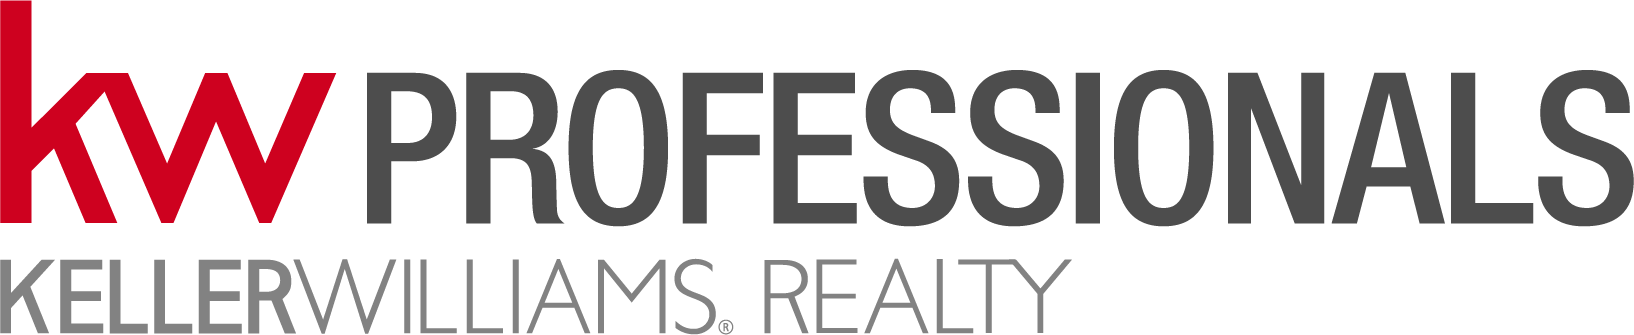 Keller Williams Realty Professionals Logo